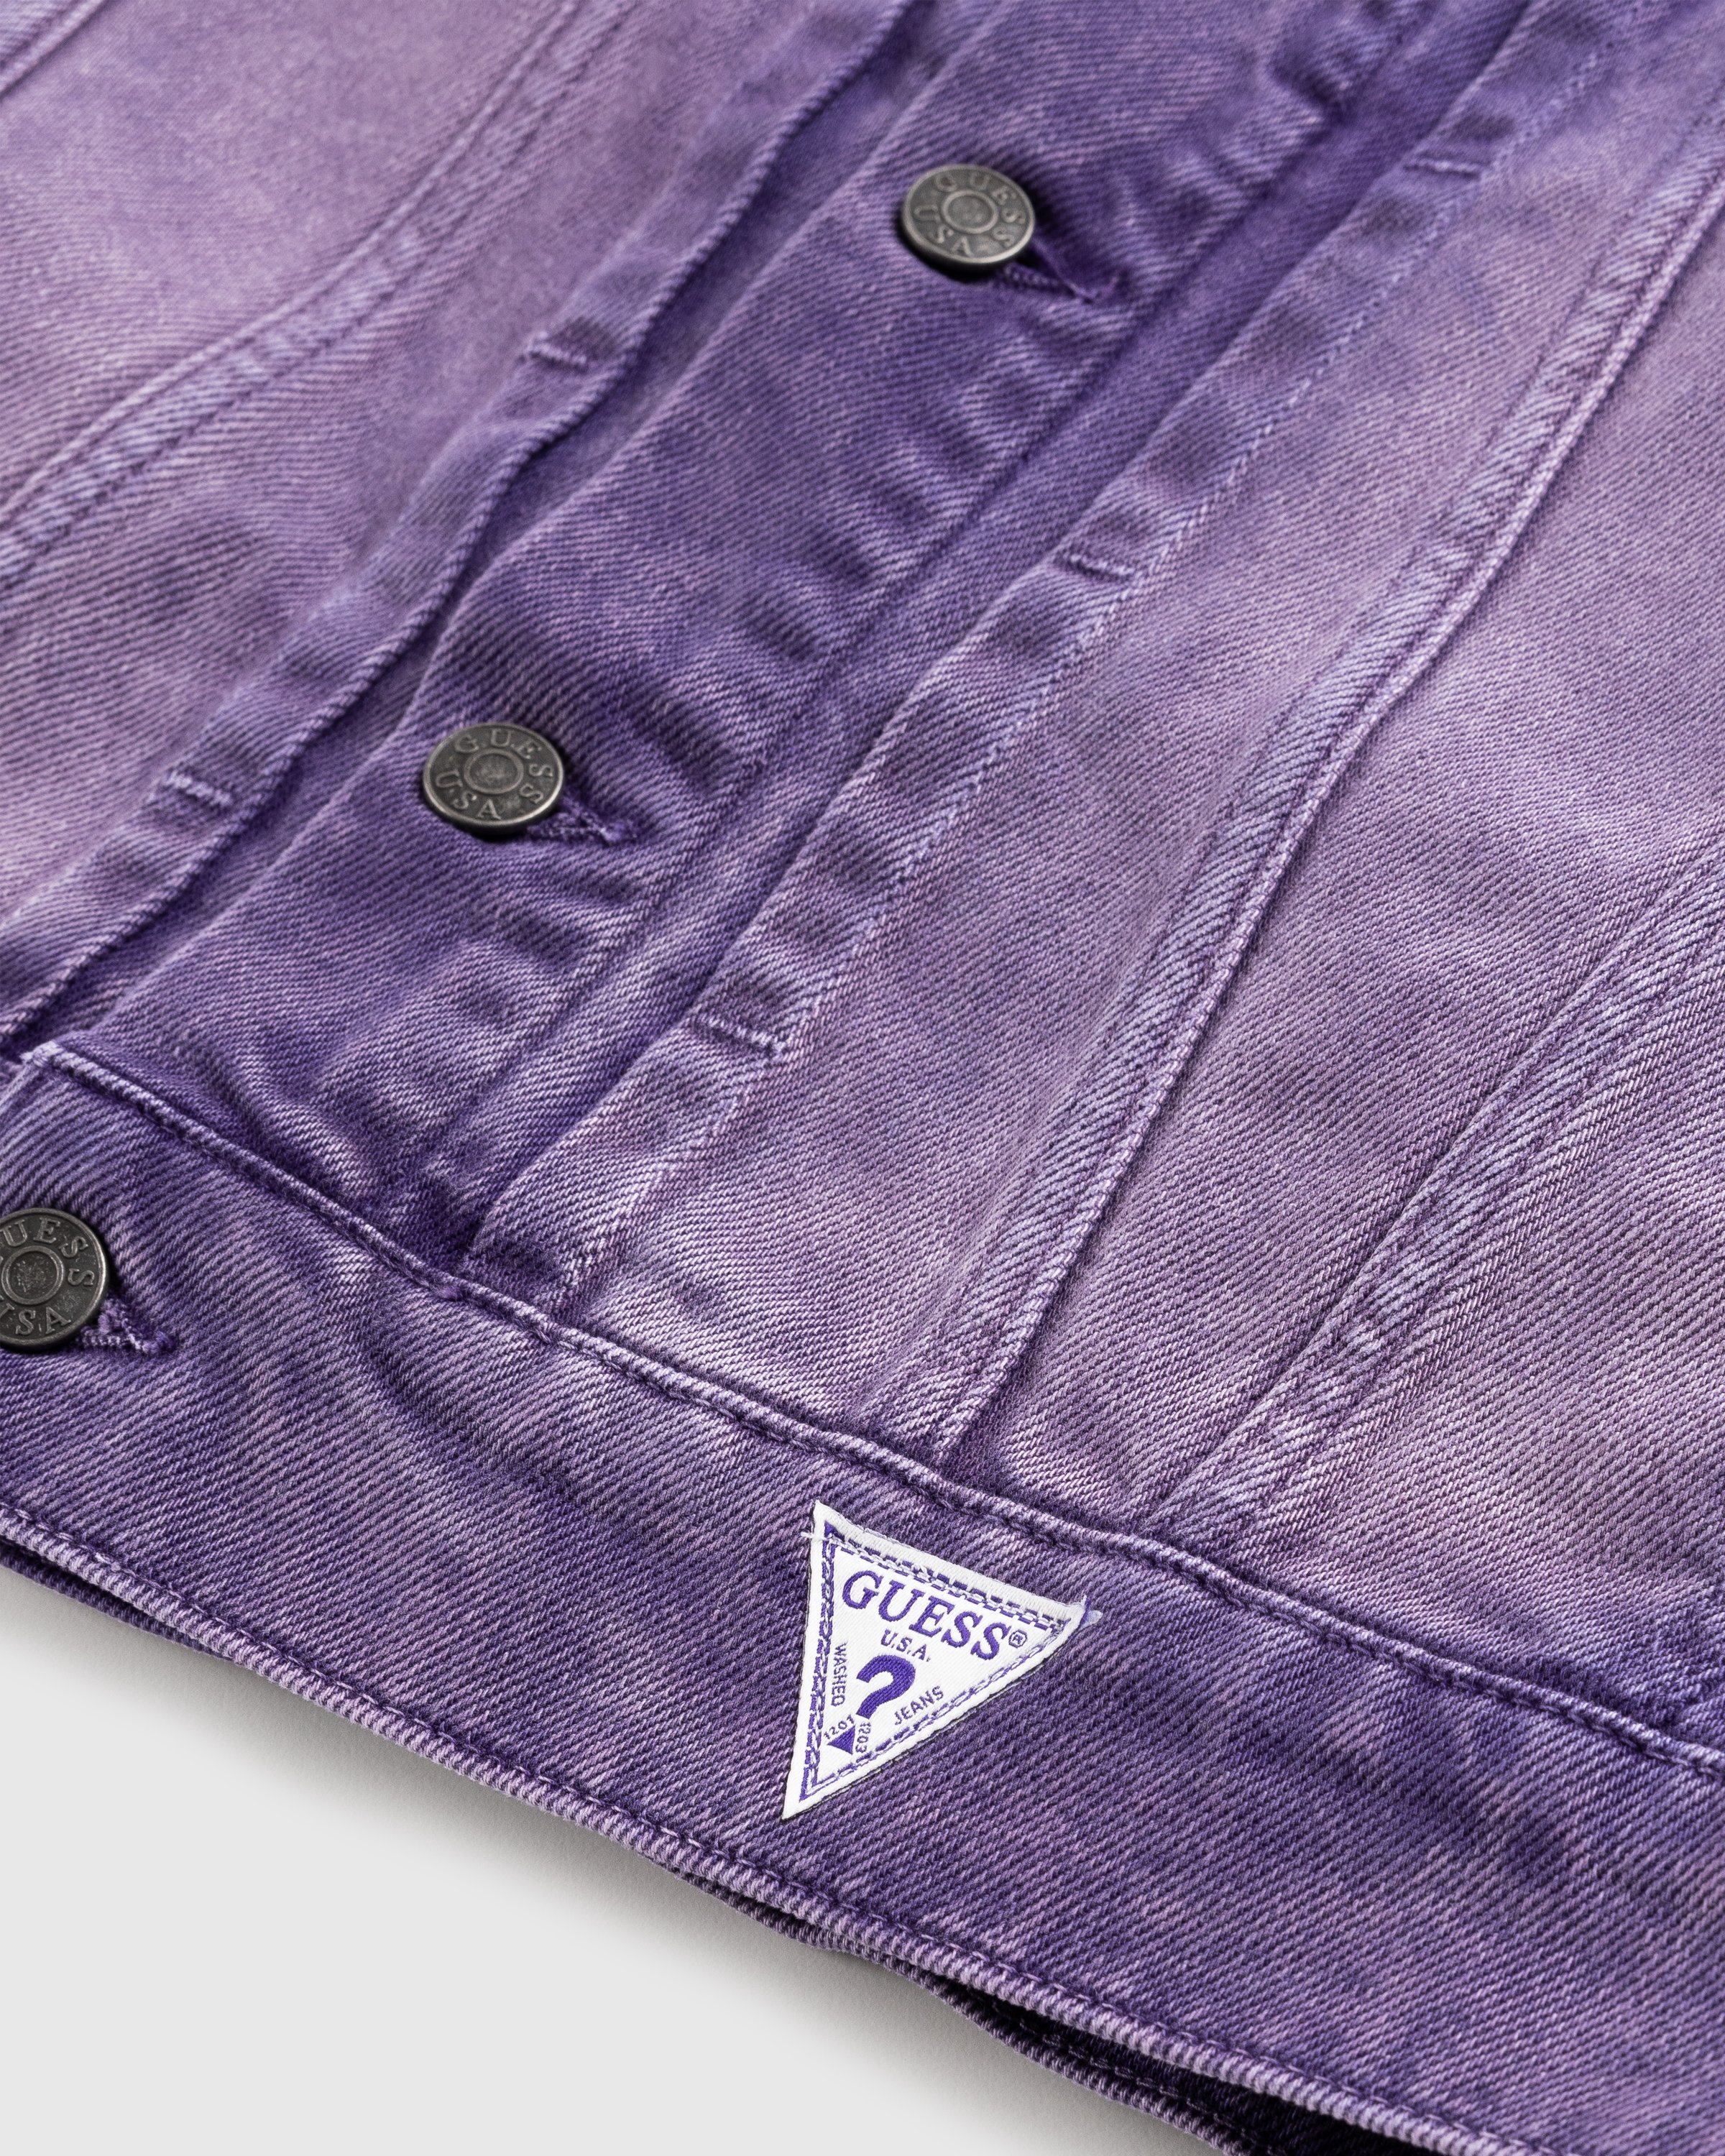 Guess USA - Vintage Denim Jacket Purple - Clothing - Purple - Image 6